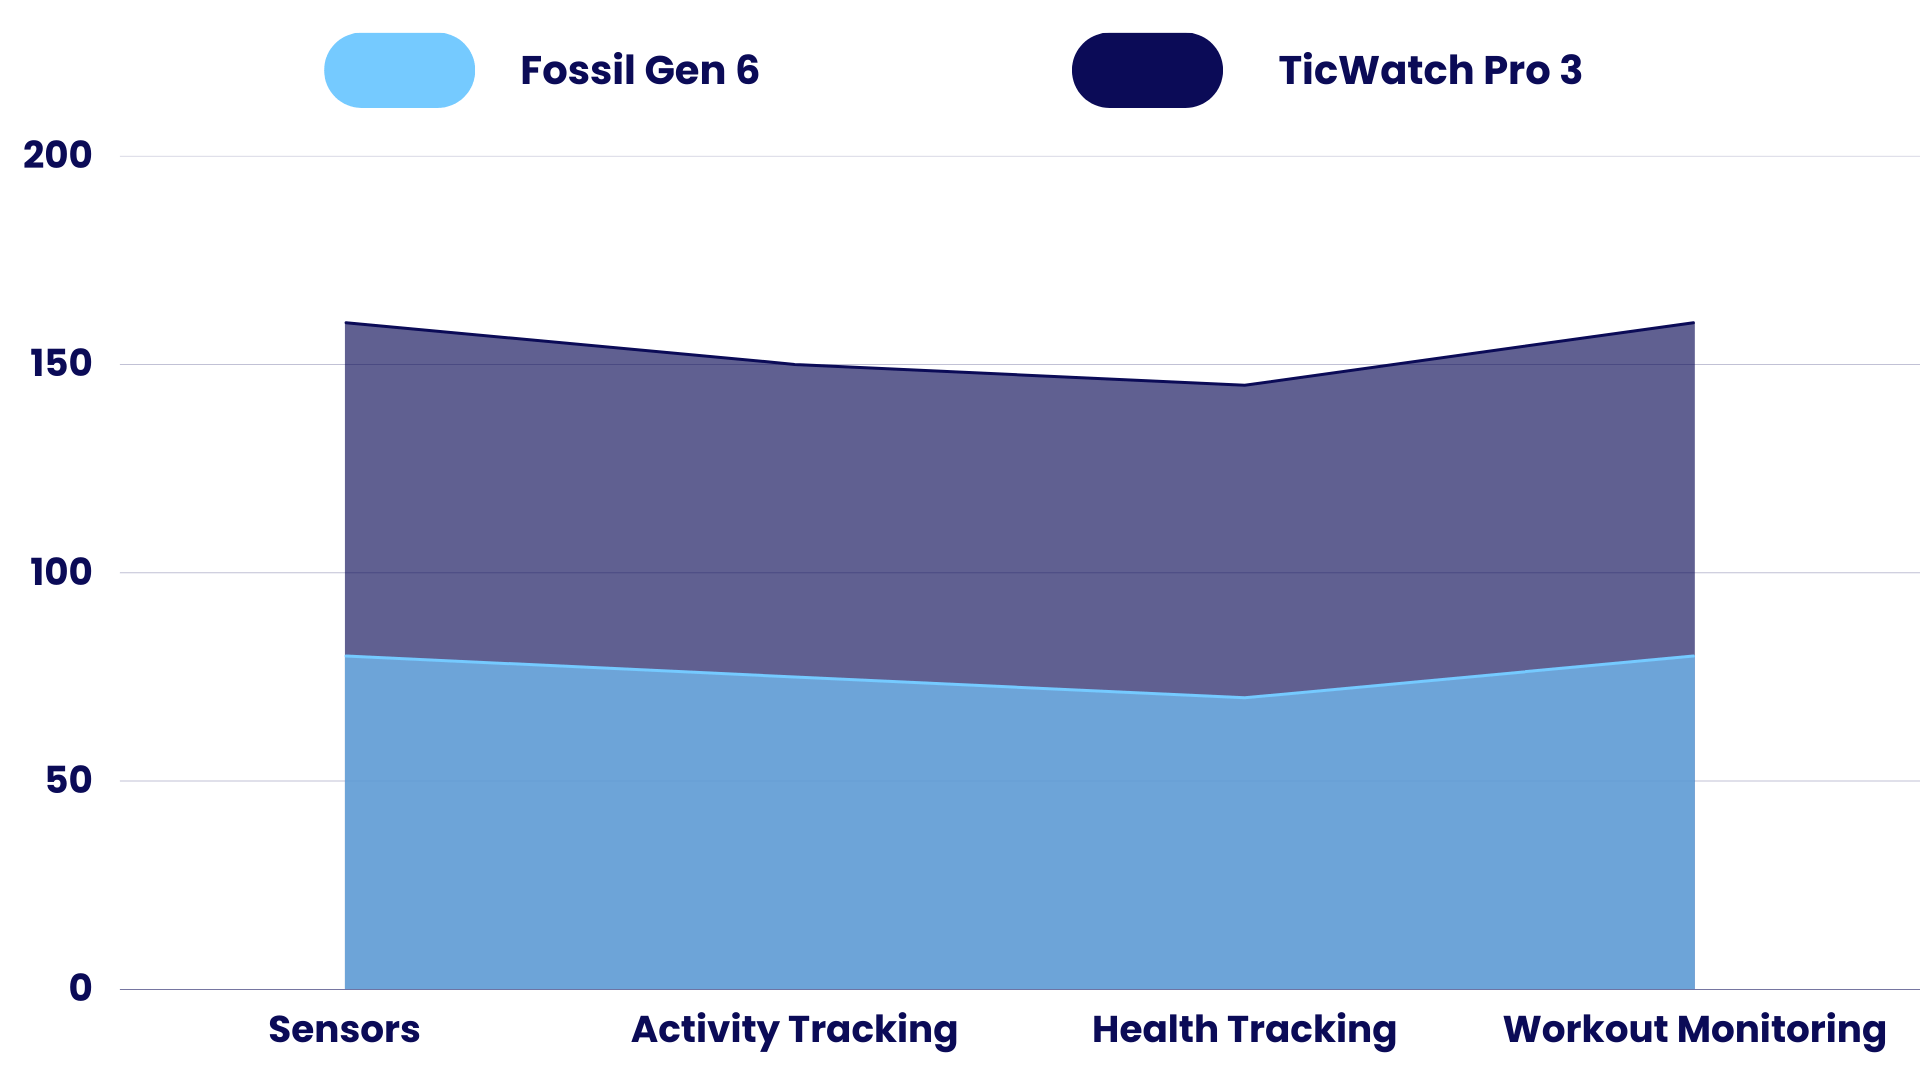 Sensors Comparison of Fossil Gen 6 vs TicWatch Pro 3